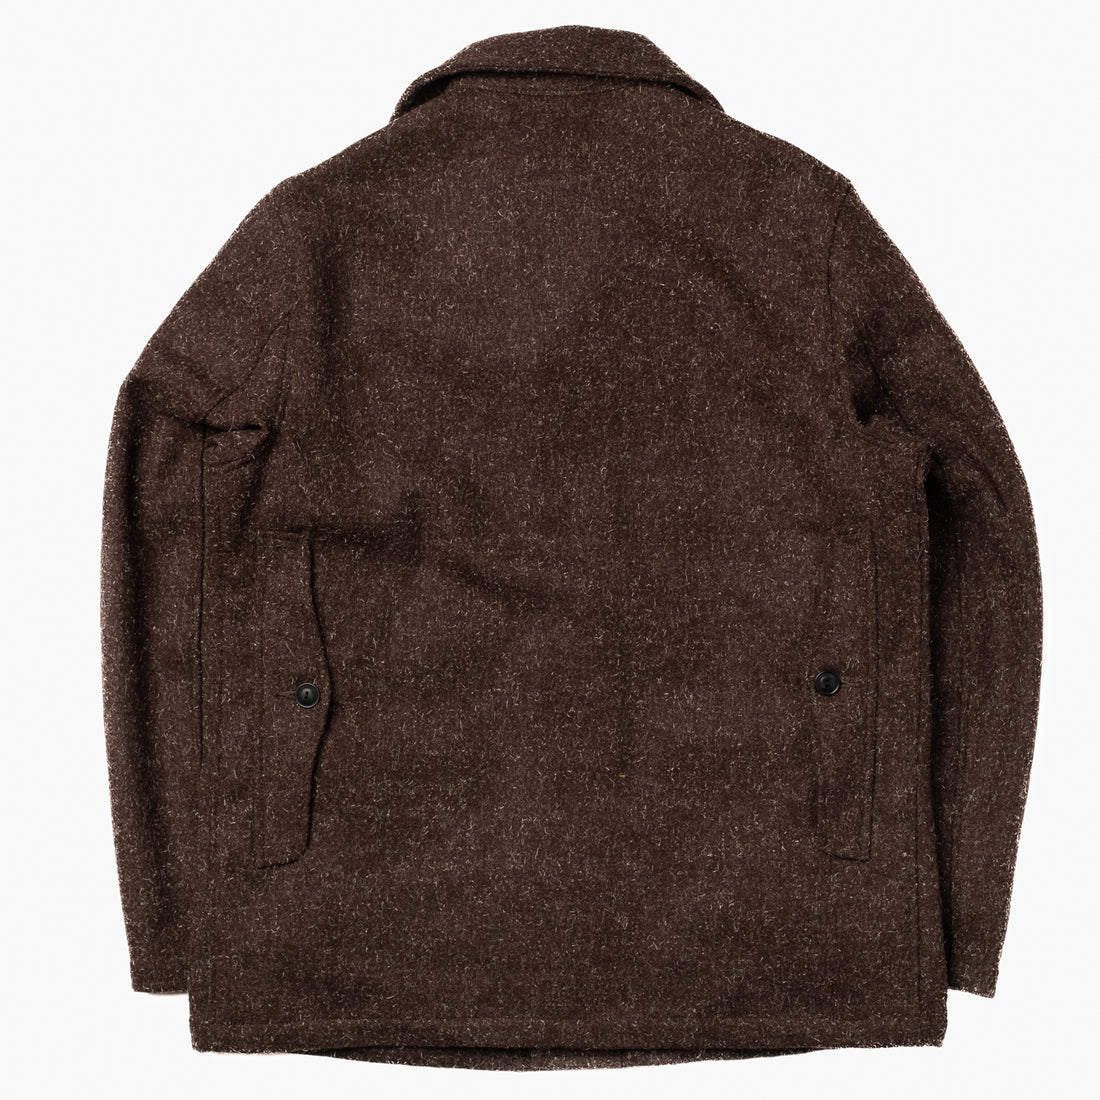 Bryceland's Hunting Jacket Brown Kenpi Wool